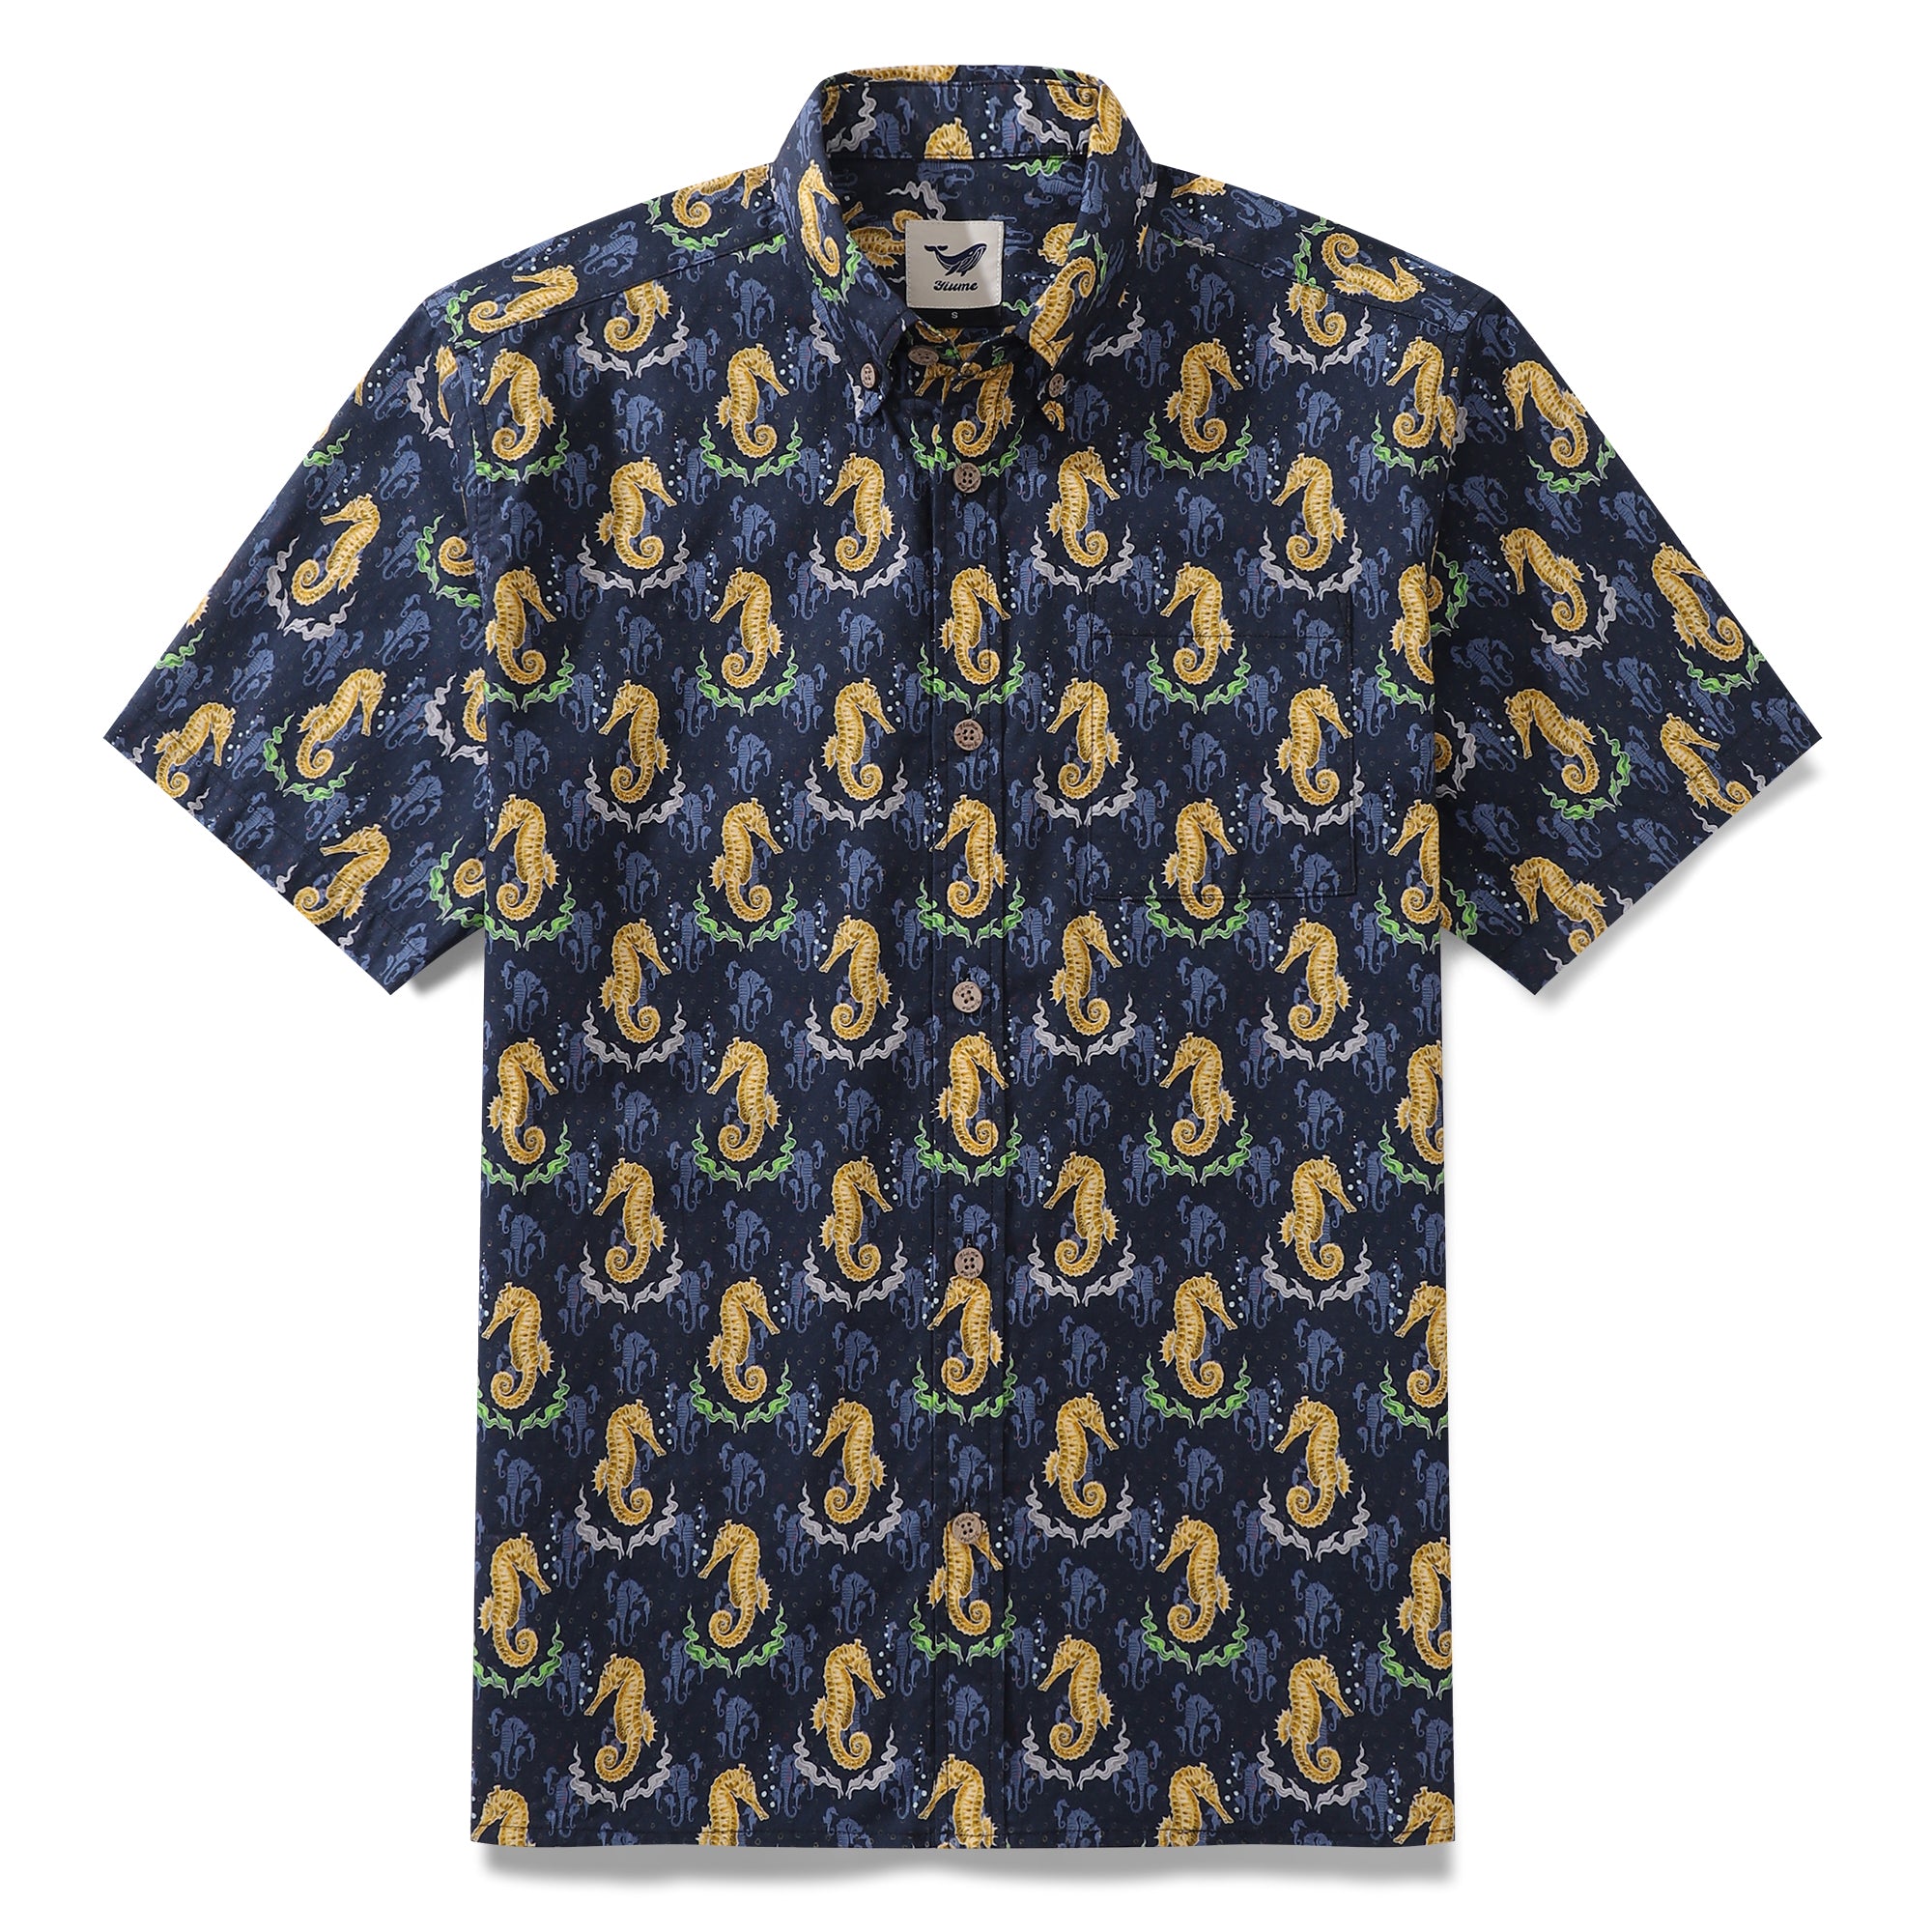 Camisa hawaiana para hombre, camisa Aloha de manga corta con botones de algodón con estampado de caballitos de mar masculinos